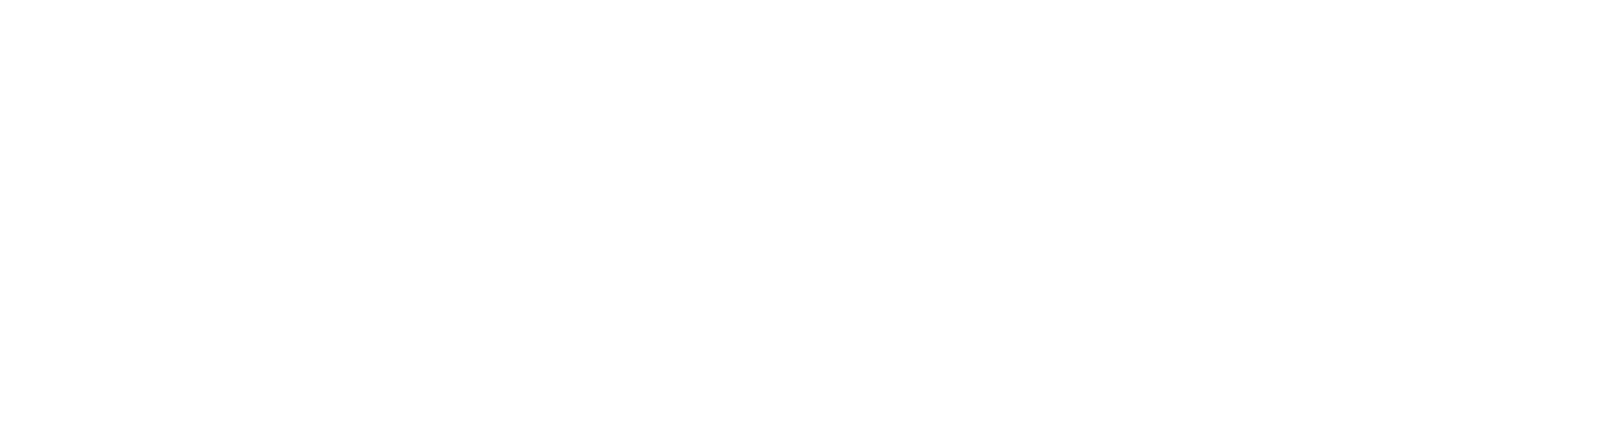 Council Opticians